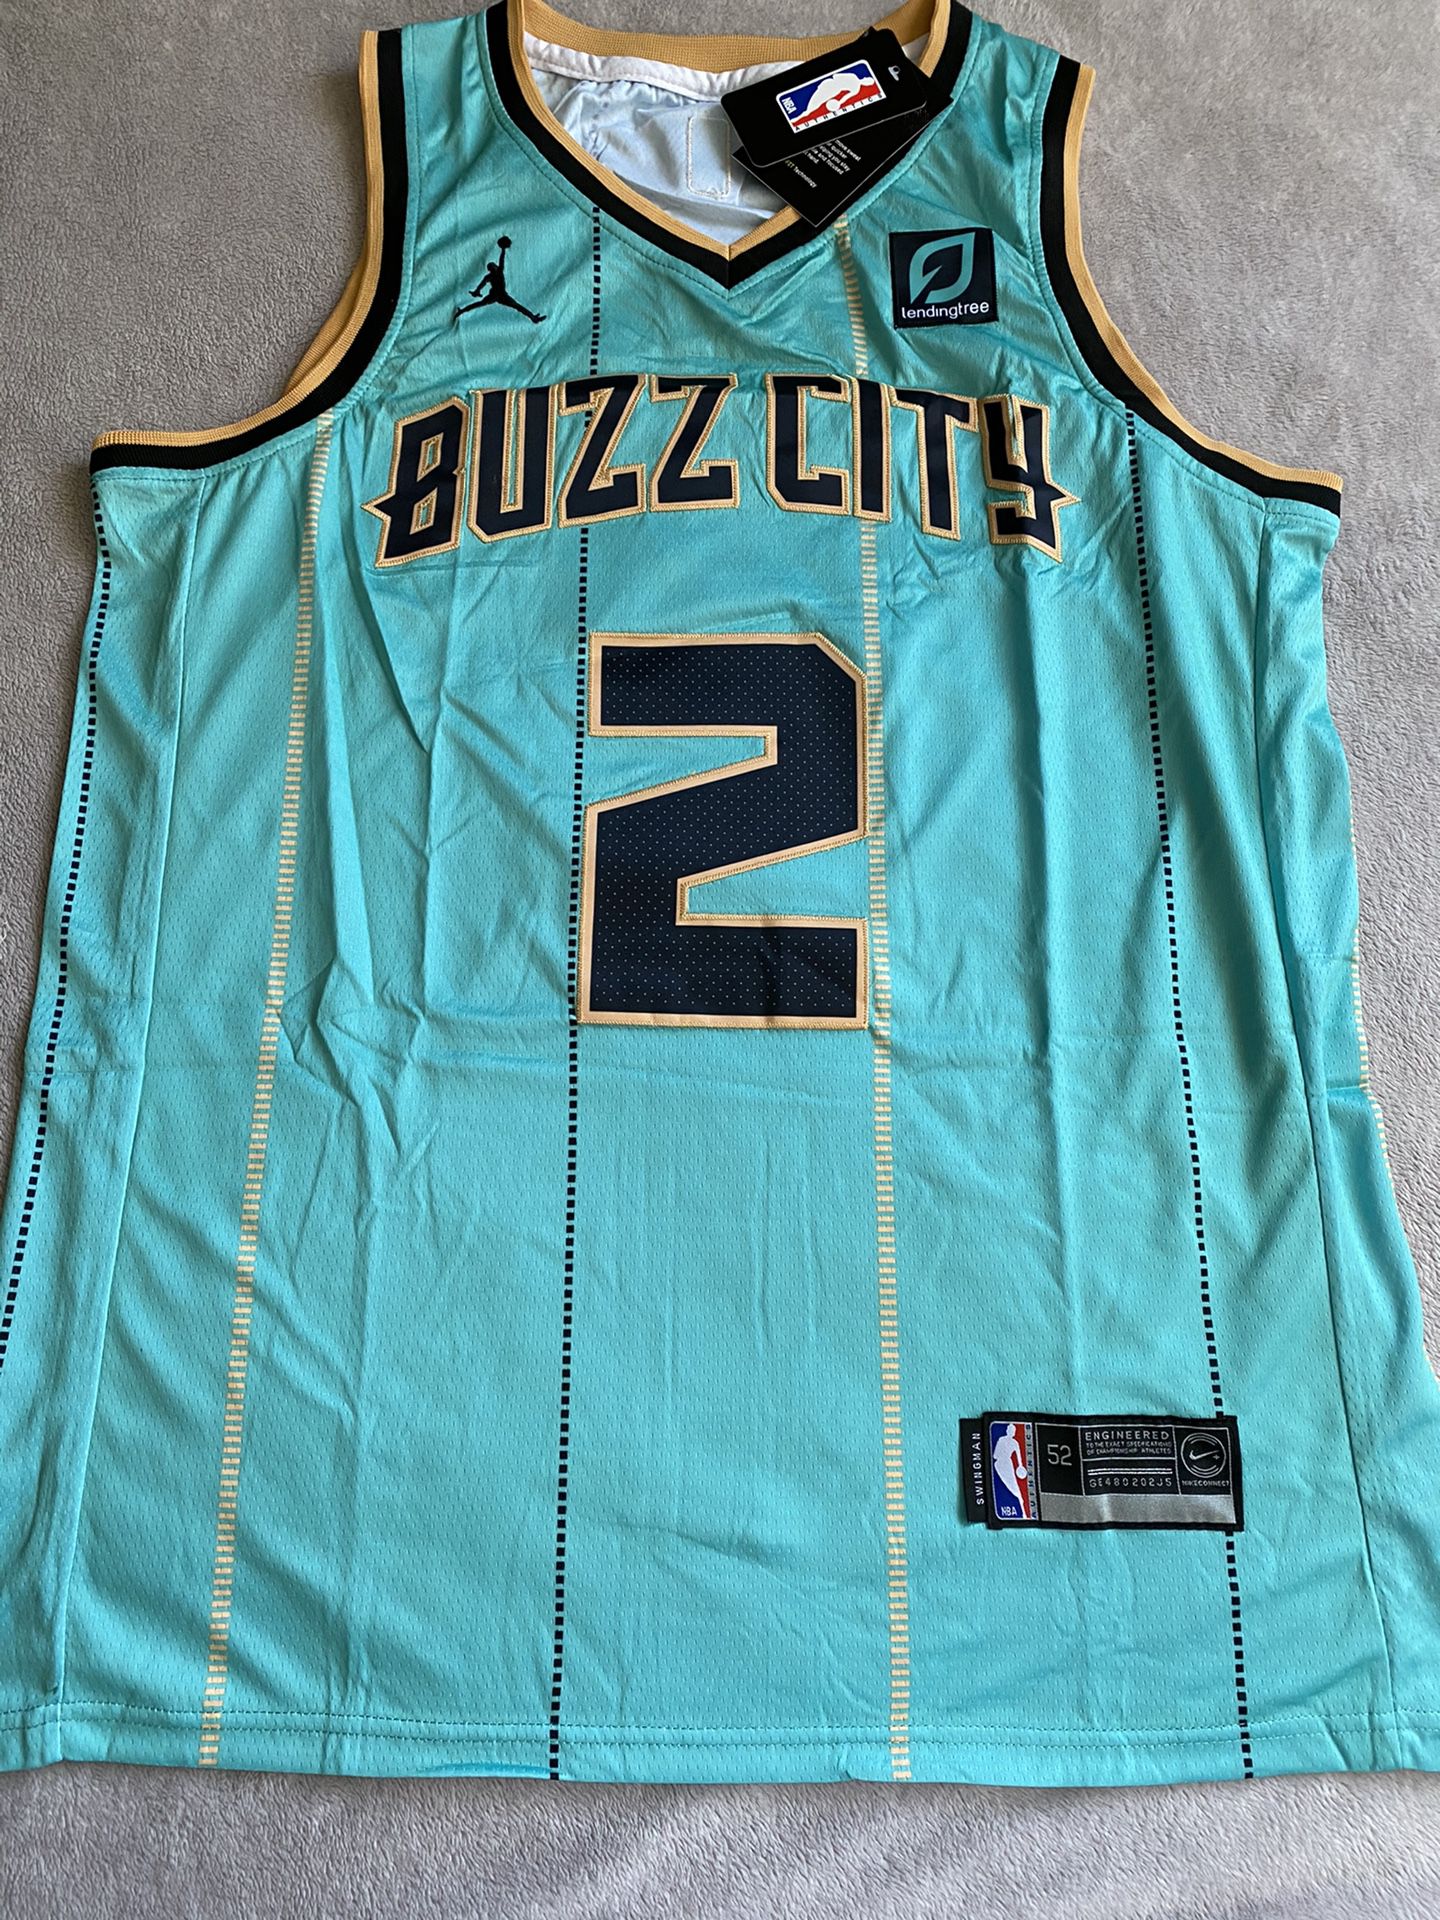 Lamelo Ball Hornets Buzz City Jersey L for Sale in Englishtown, NJ